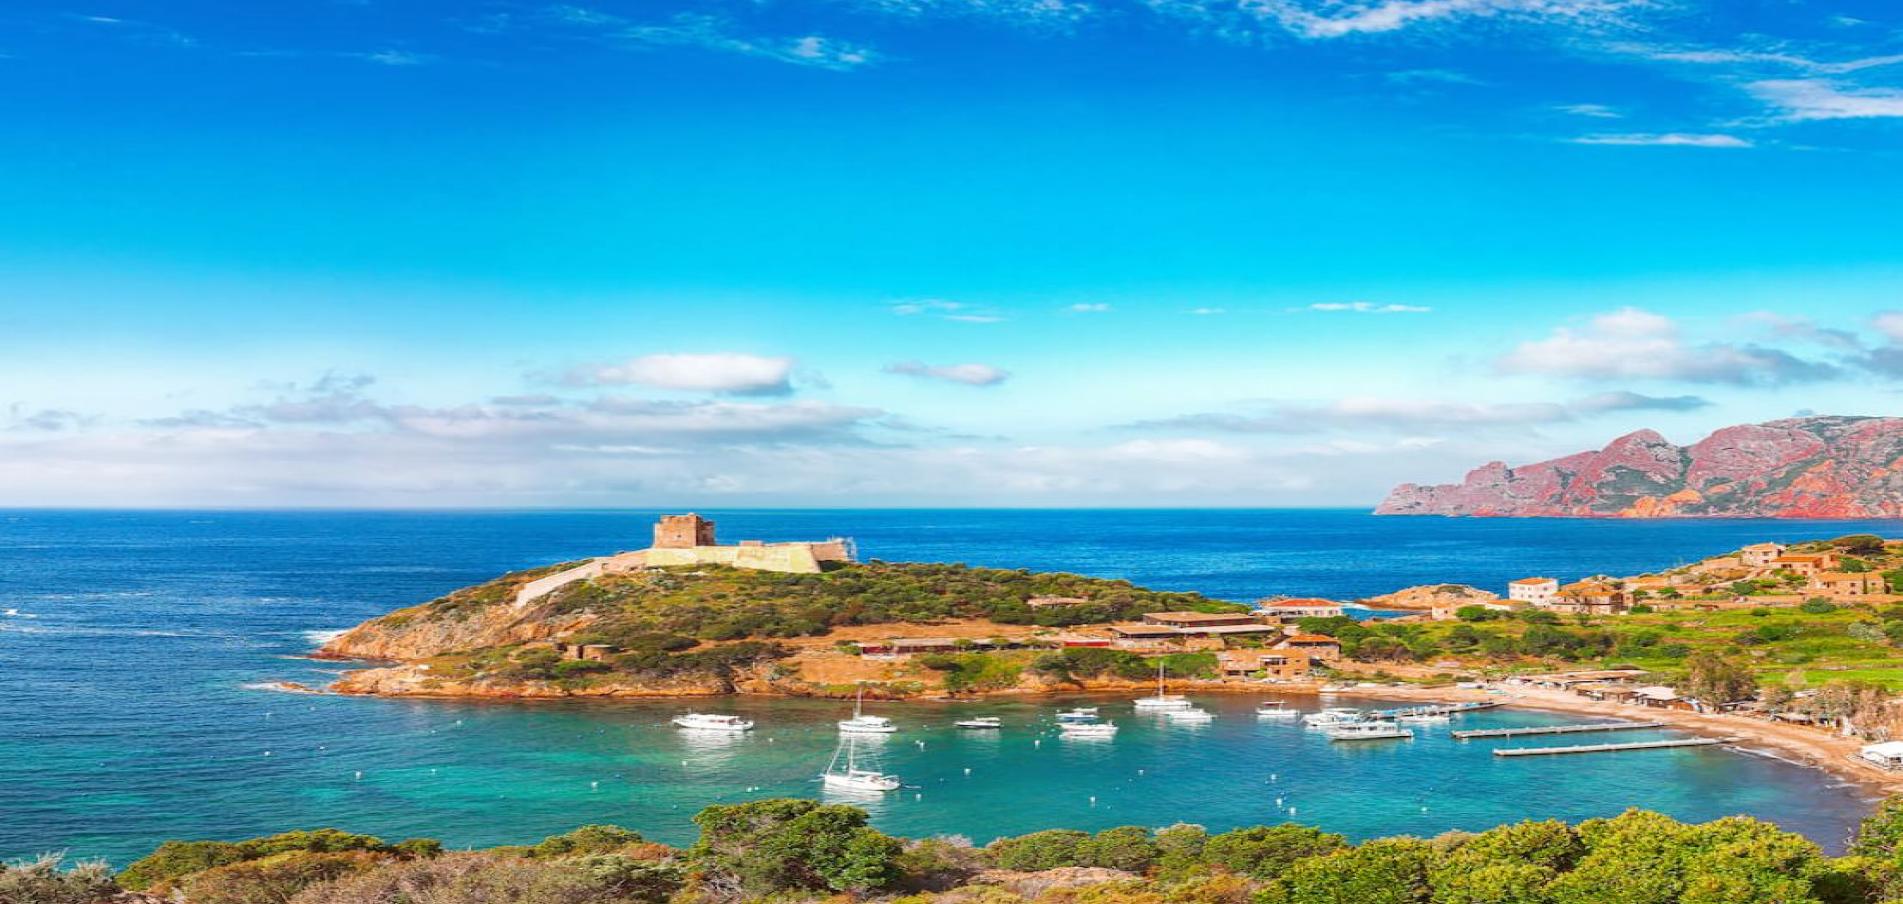 Location de yacht de luxe Corse